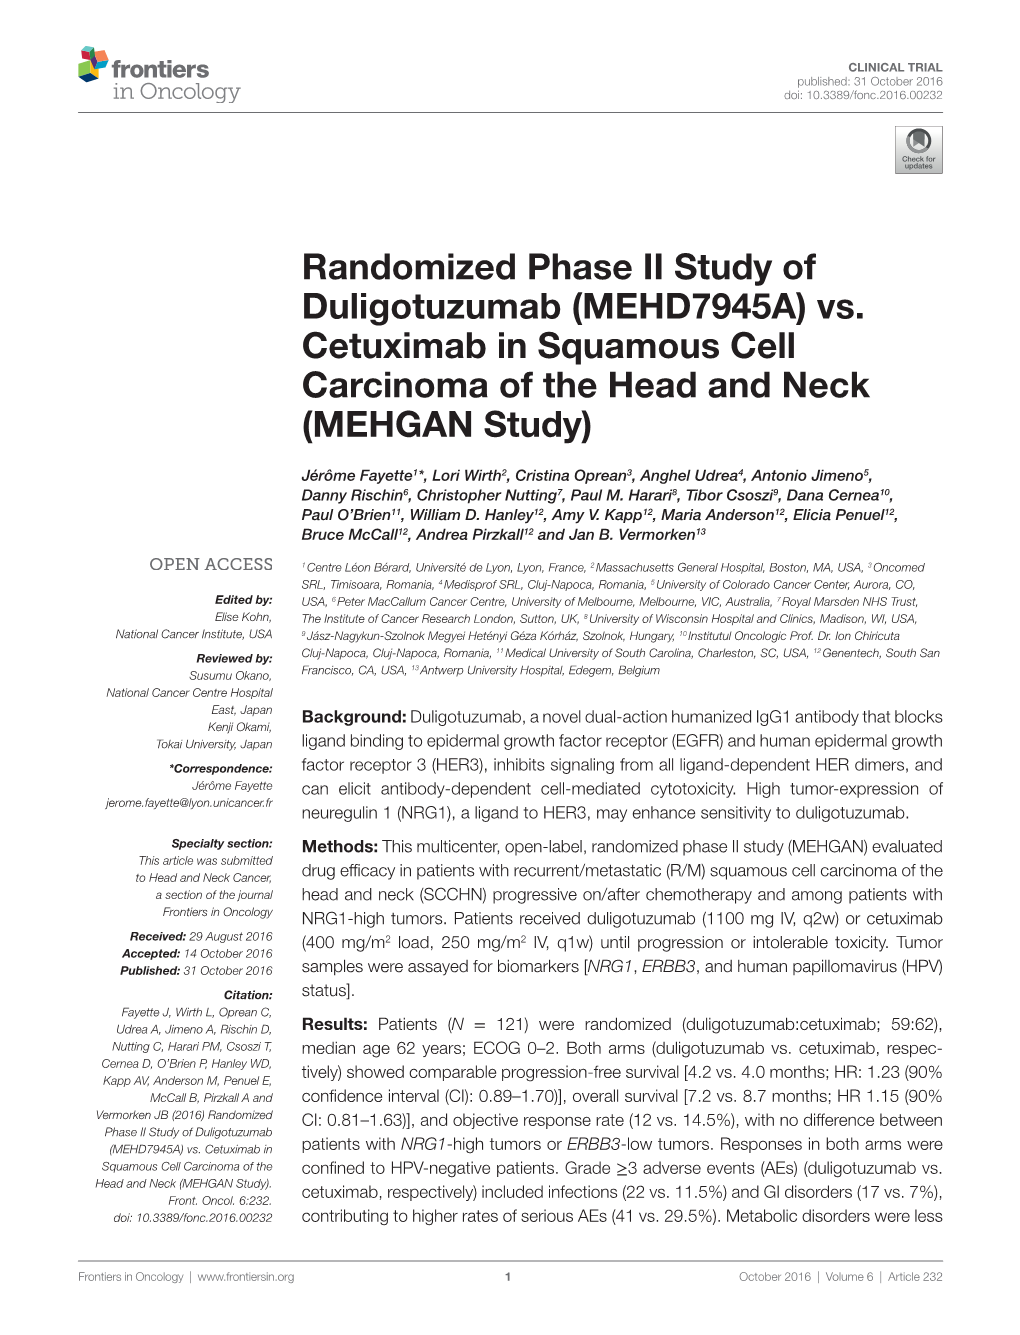 Randomized Phase II Study of Duligotuzumab (MEHD7945A) Vs